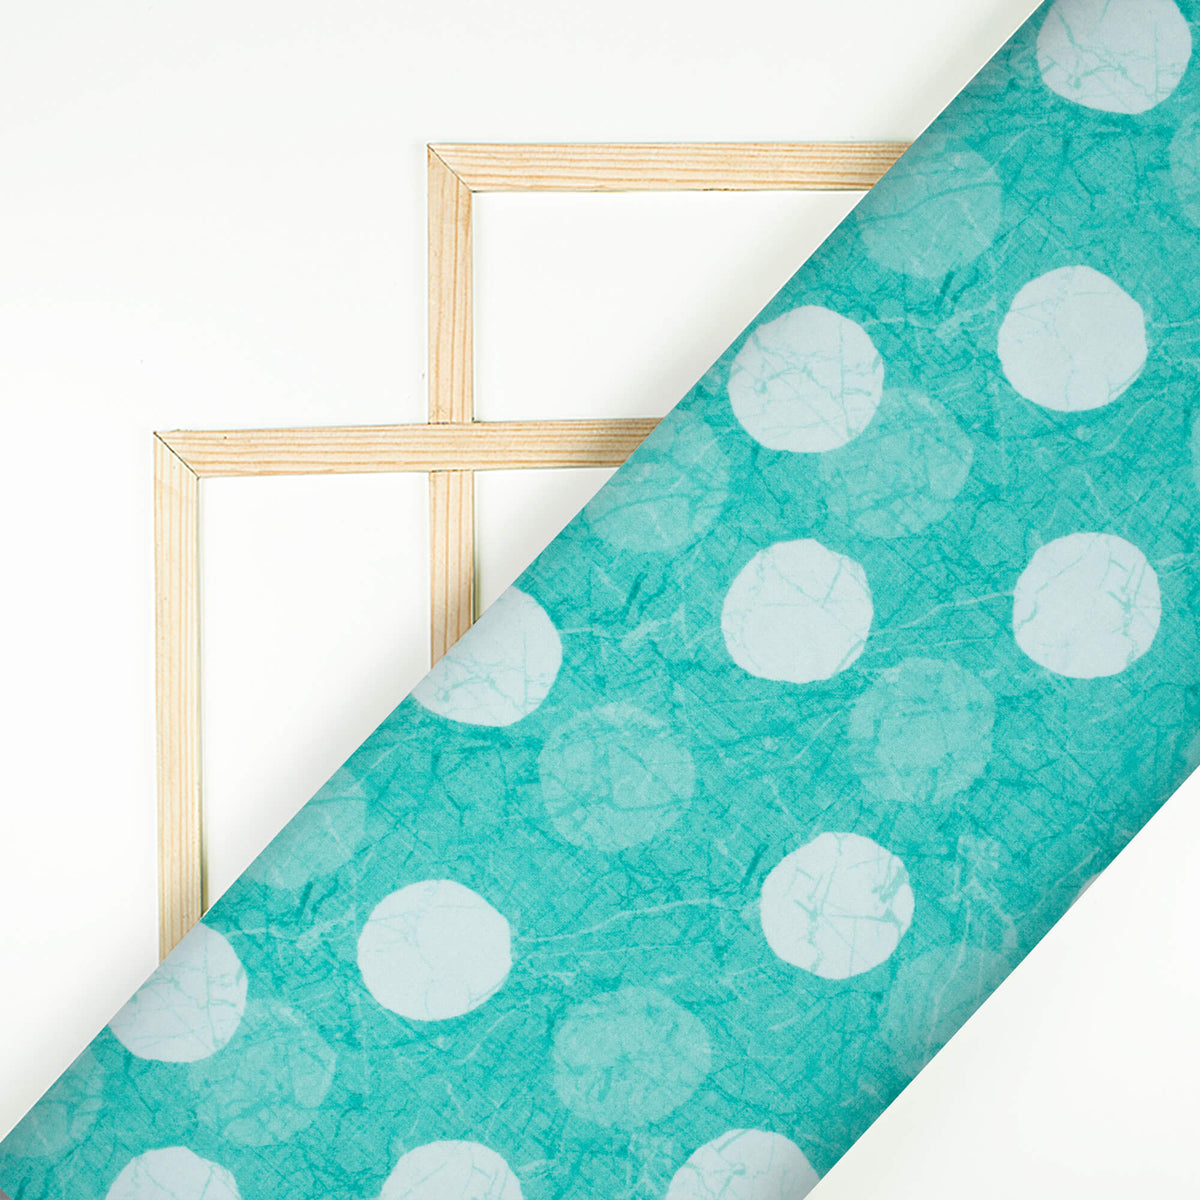 Turquoise And White Geometric Pattern Digital Print Premium Lush Satin Fabric